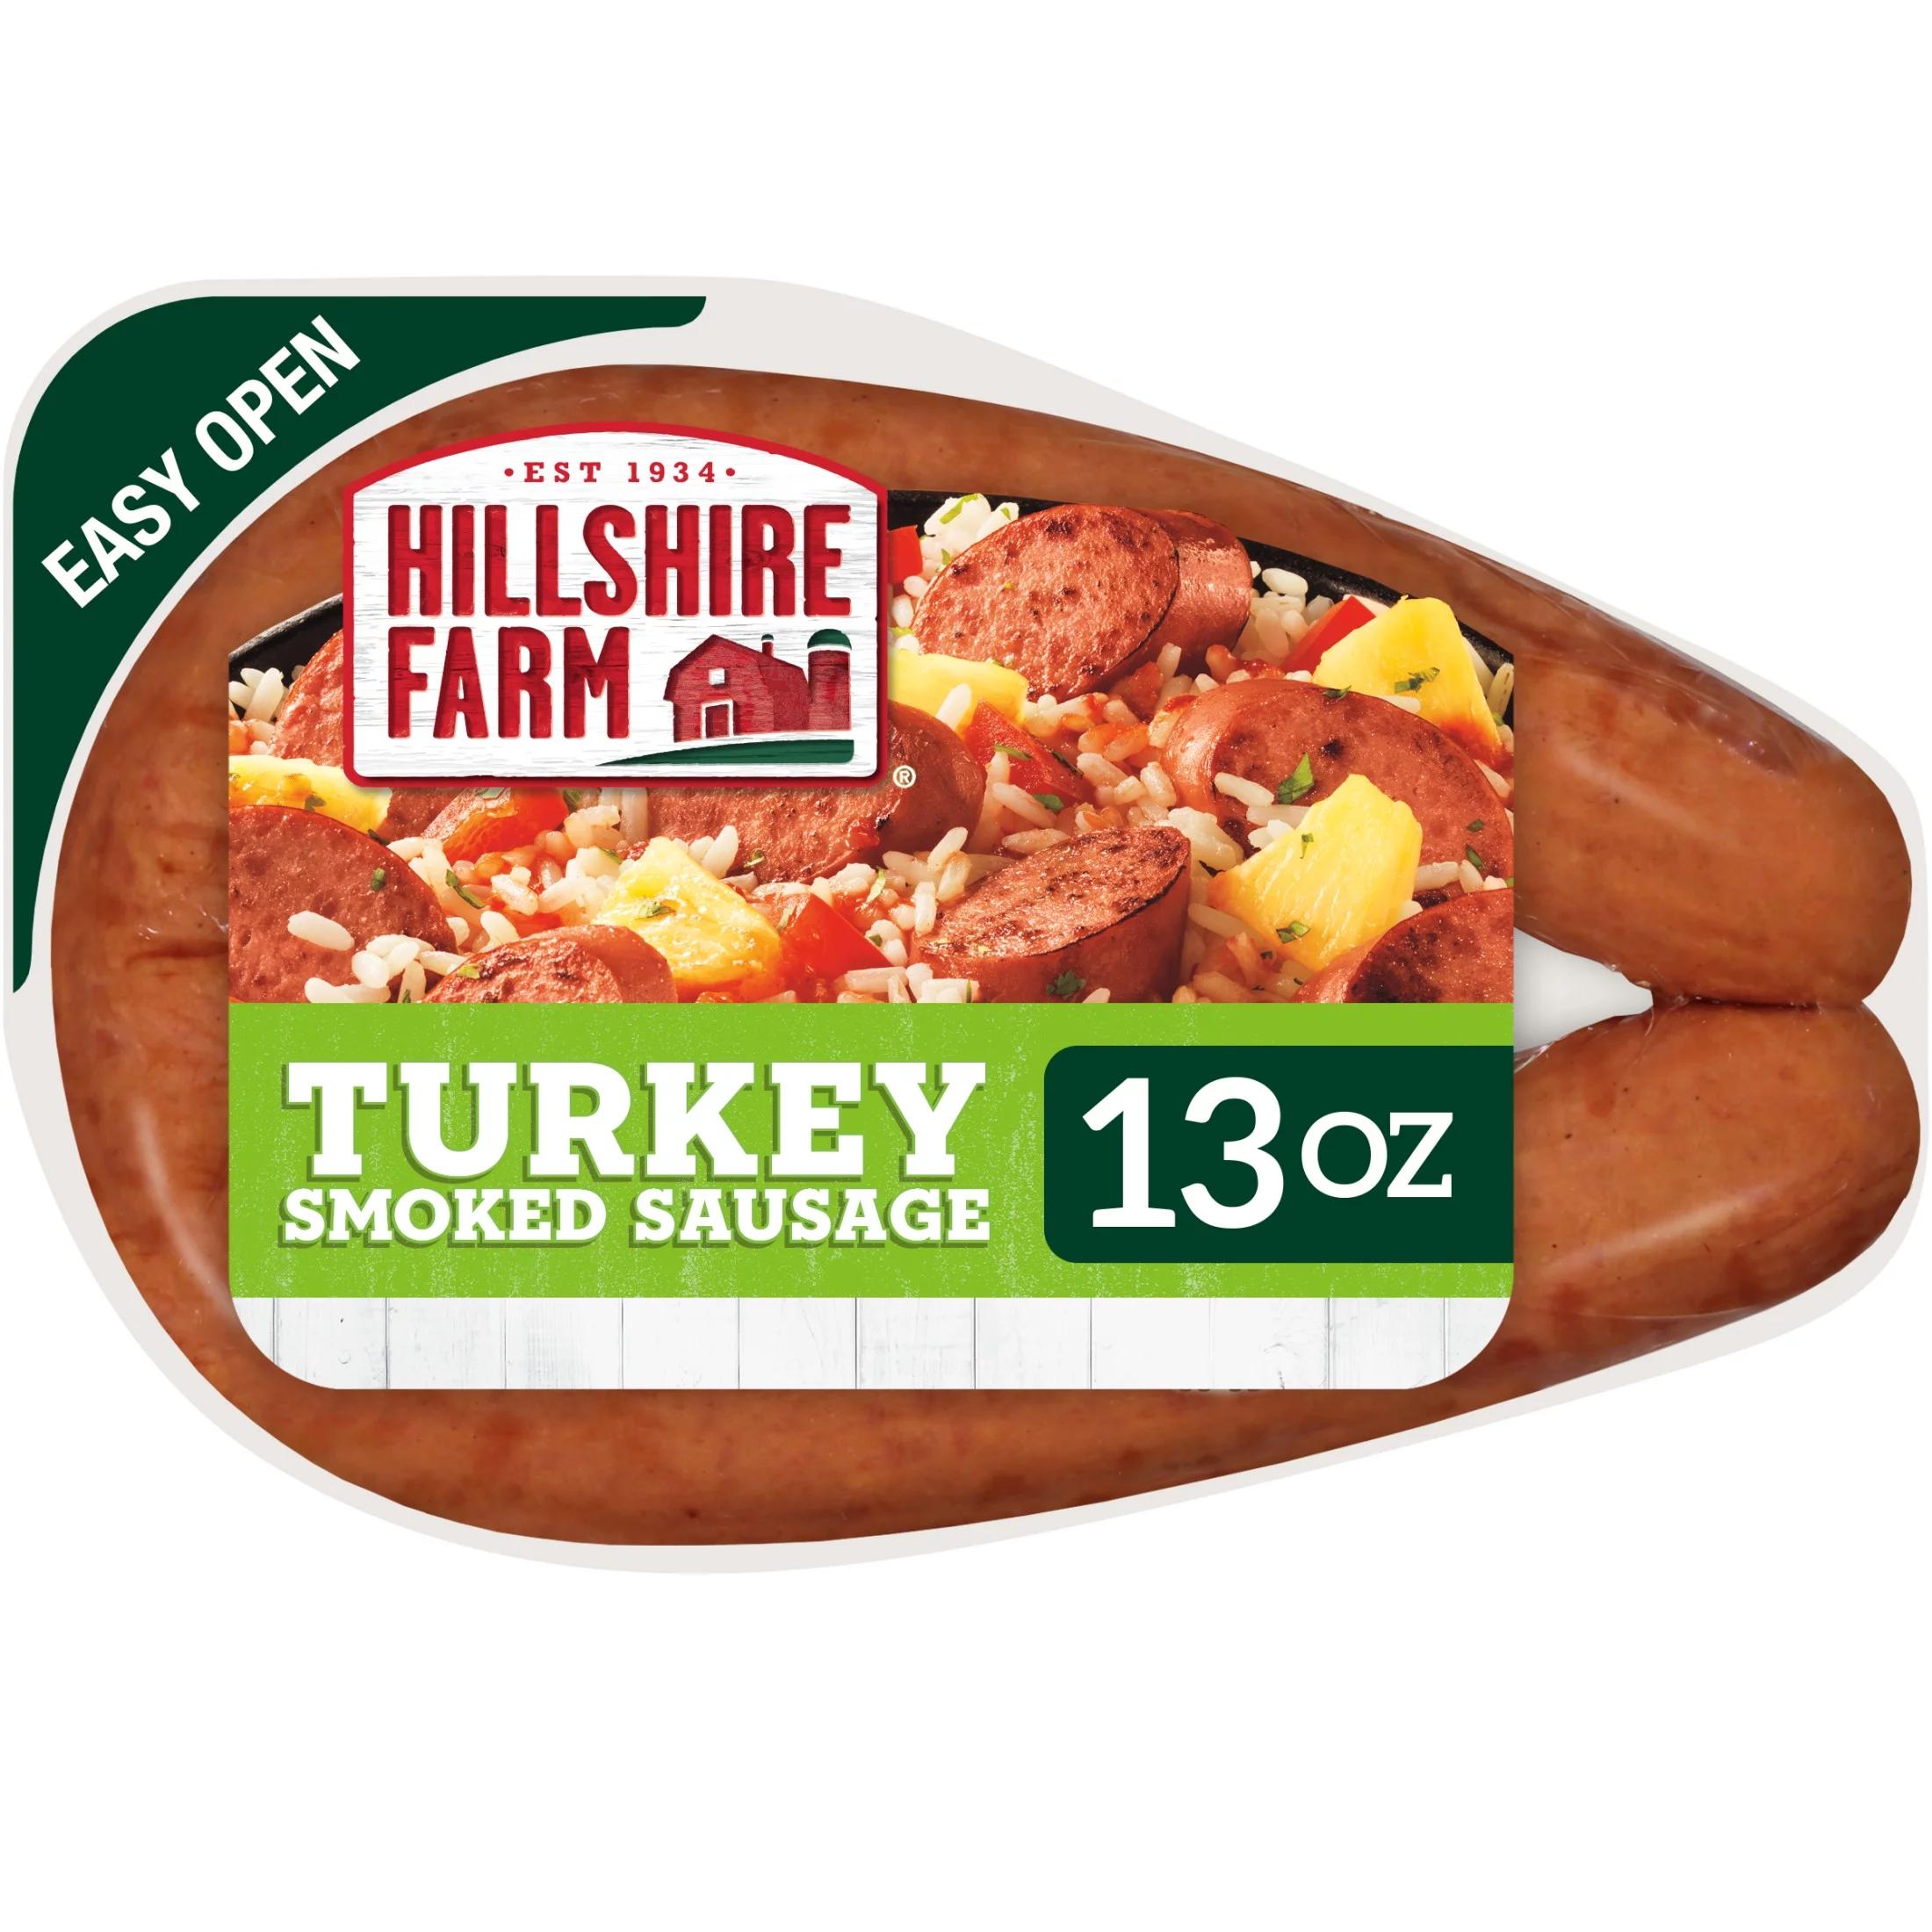 smoked turkey sausage hillshire farms - How many calories are in Hillshire Farm turkey smoked sausage